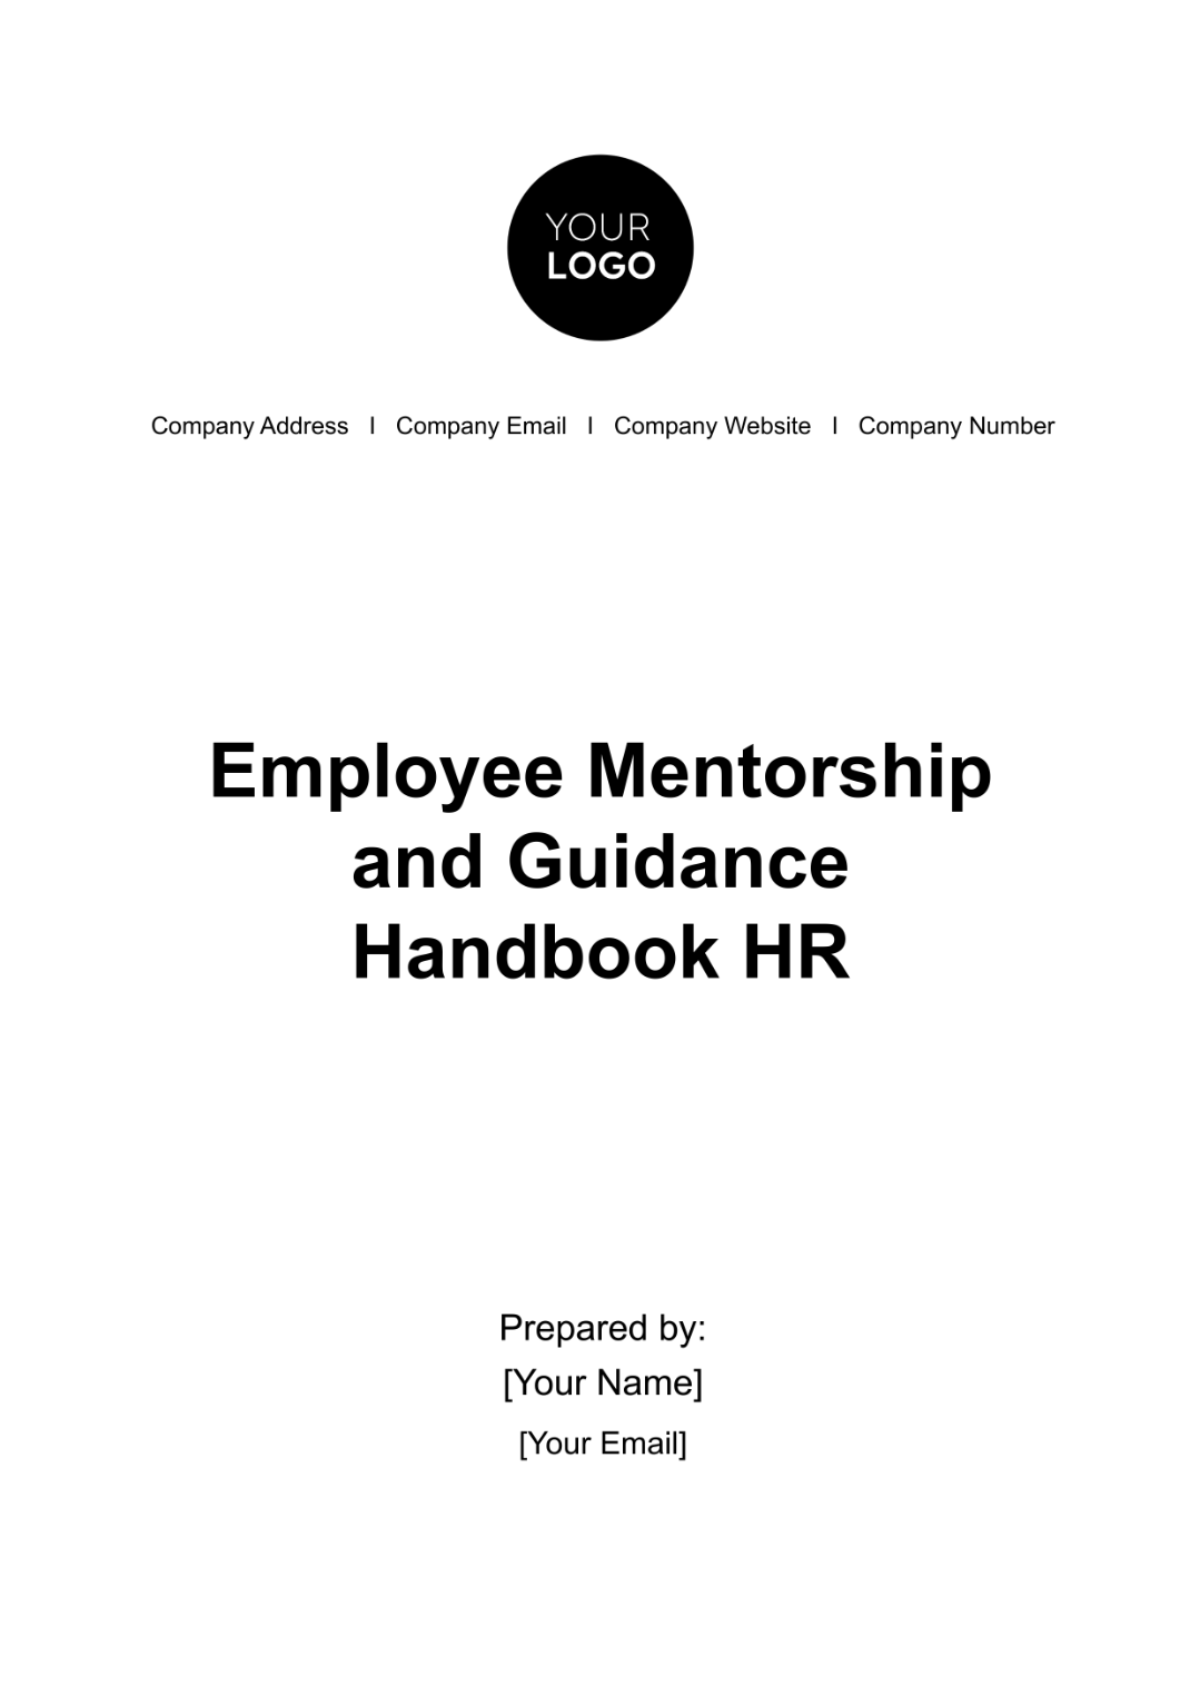 Free Employee Mentorship and Guidance Handbook HR Template